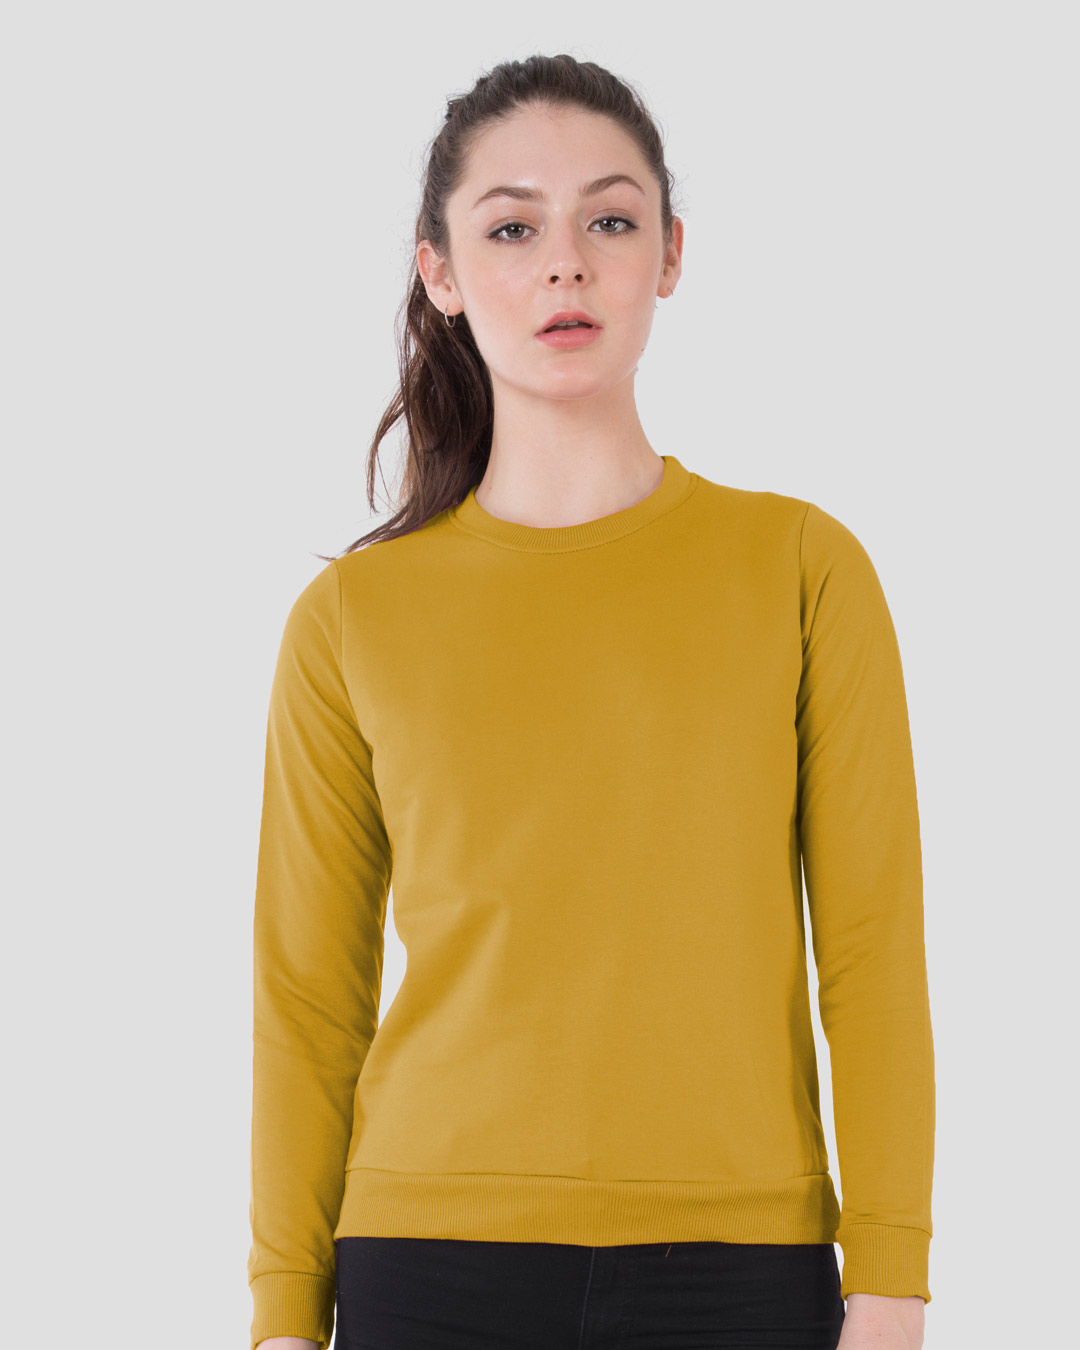 Buy Mustard Yellow Fleece Light Sweatshirt for Women yellow Online at ...